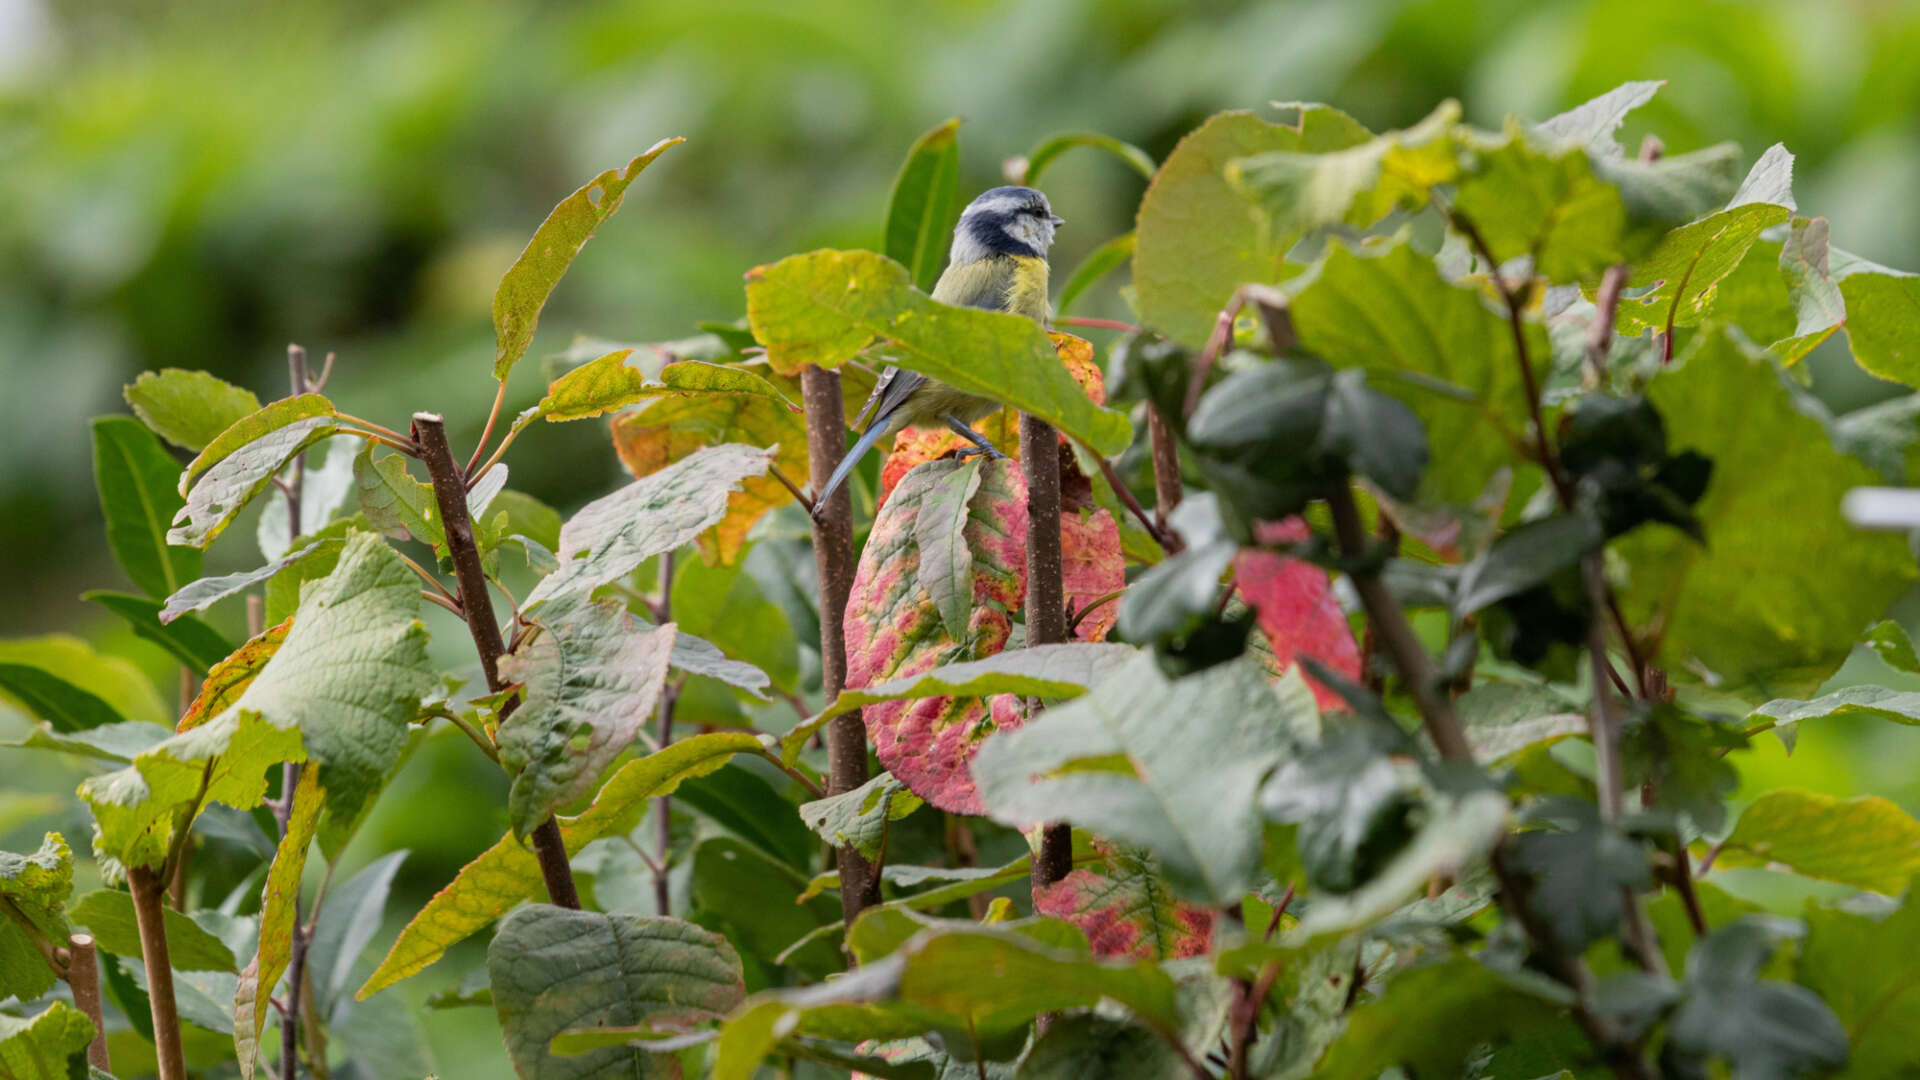 Blue Tit Bird sitting in leaves